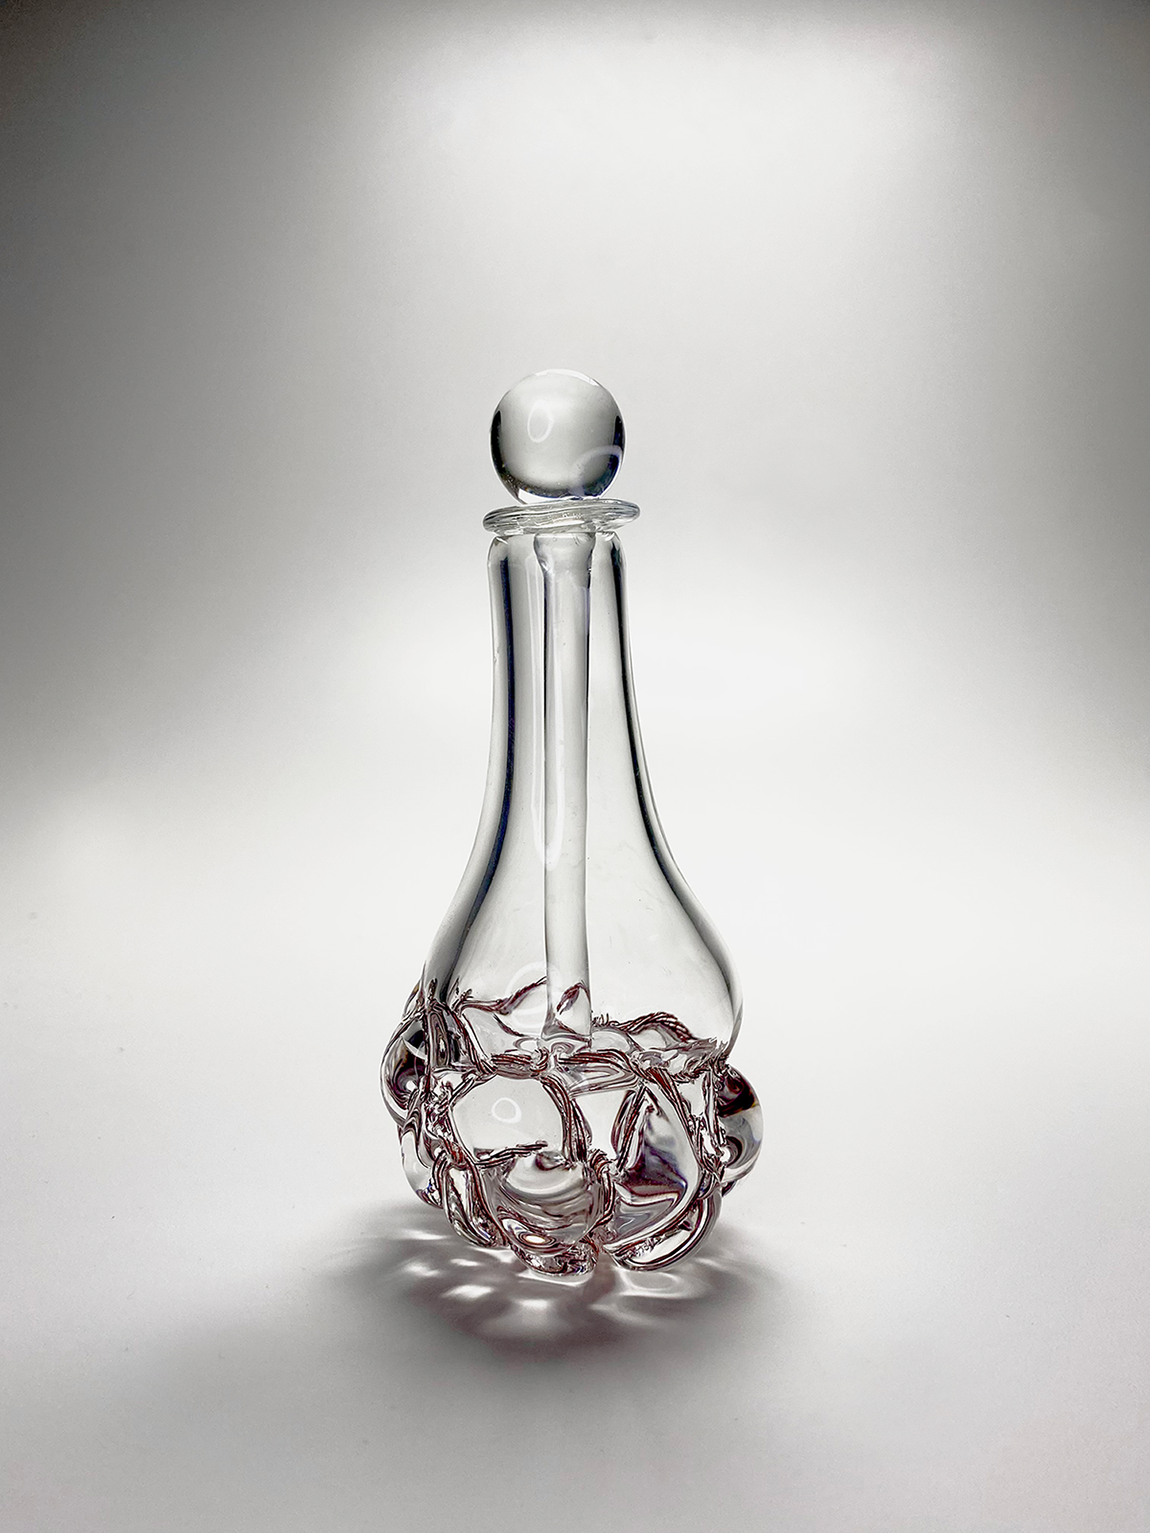 A glass perfume bottle design.